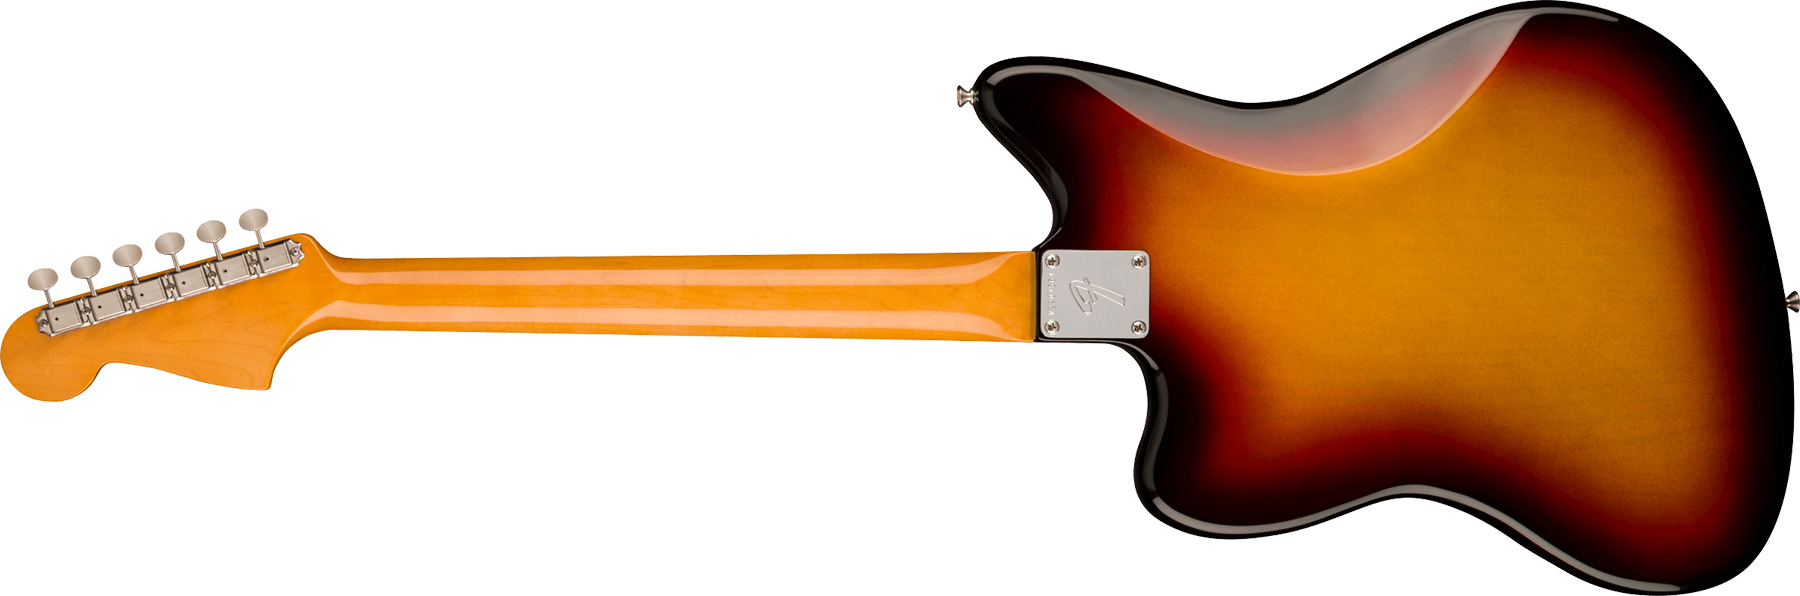 Fender Jazzmaster 1966 American Vintage Ii Usa Sh Trem Rw - 3-color Sunburst - Retro-rock elektrische gitaar - Variation 1